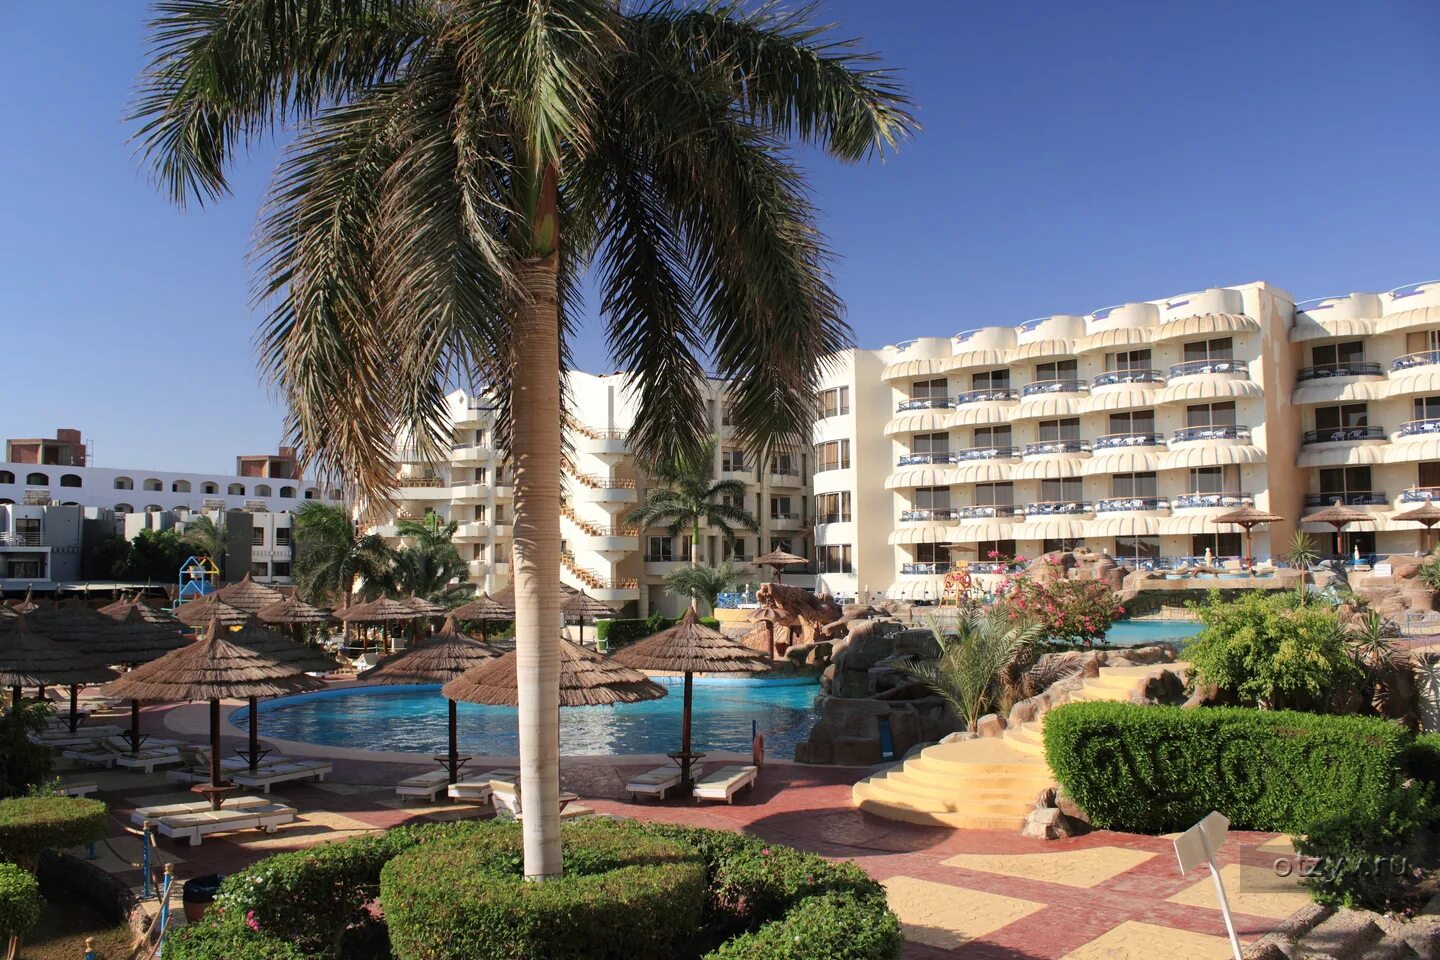 Hurghada seagull resort 4. Хургада отель Сигал 4. Отель Сигал Египет. Отель Seagull Beach Resort 4*. Сигал Бич Резорт Хургада.